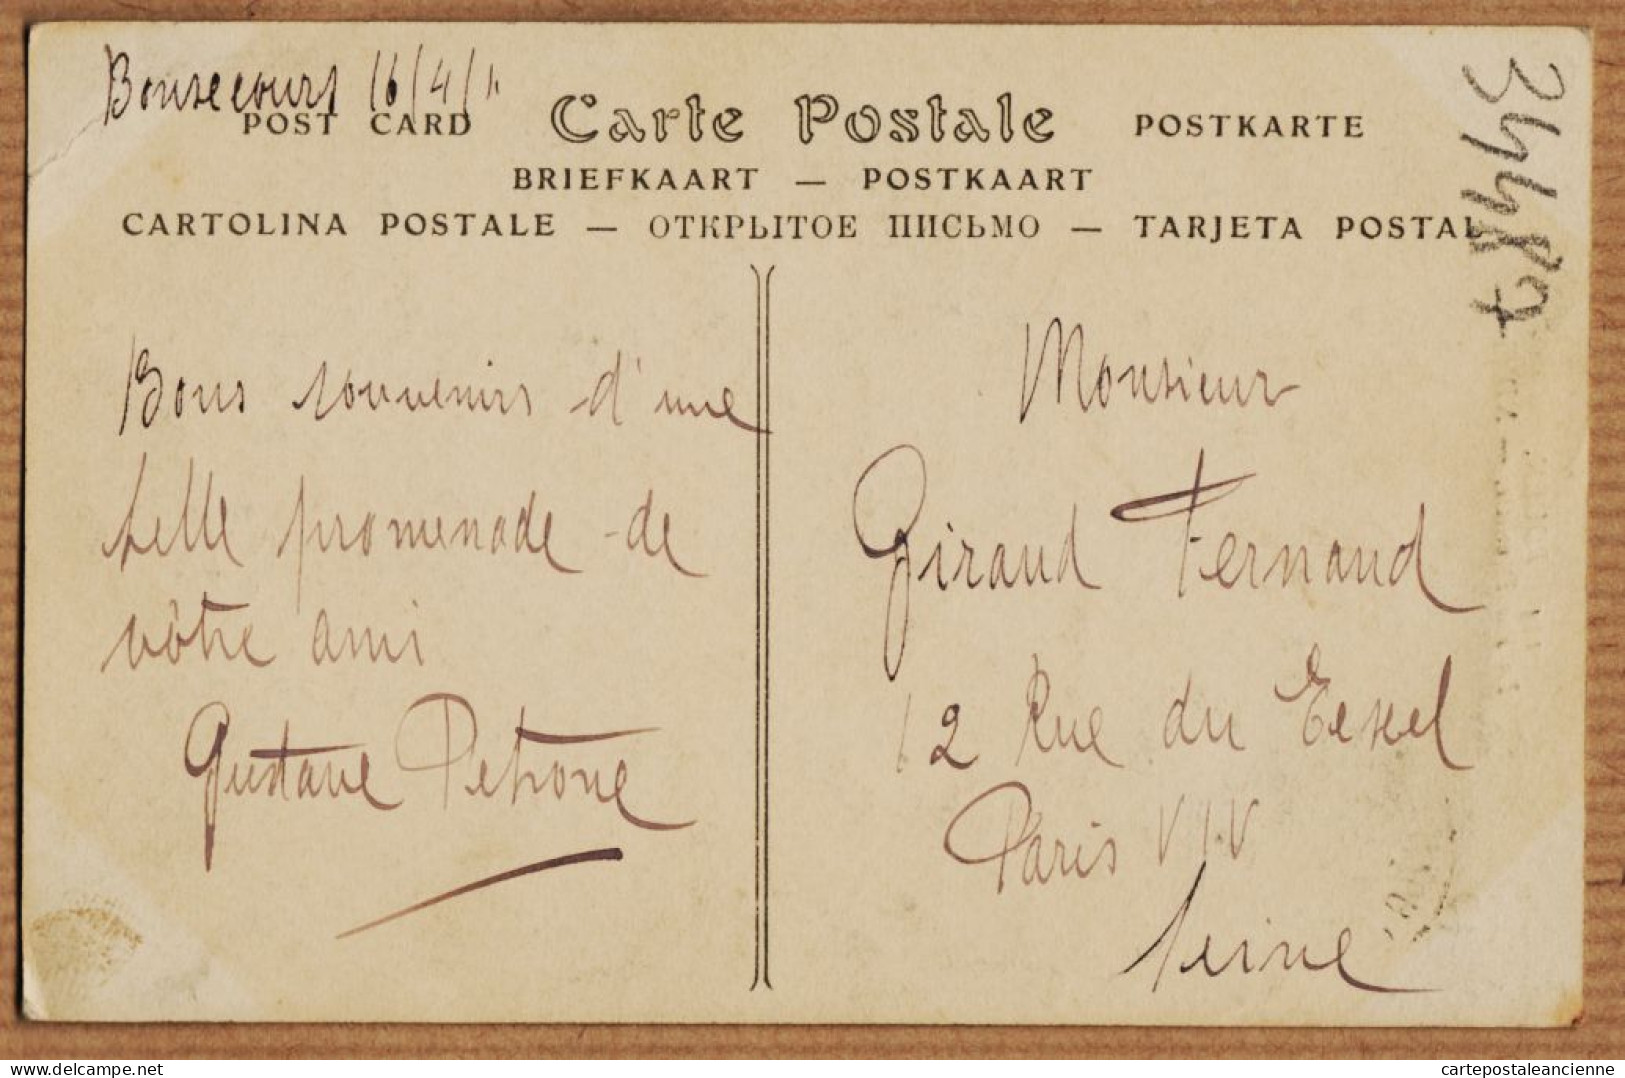 10863 / ROUEN La Rue DAMIETTE 1910s De Gustave PETRONE à Fernand GIRAUD Rue Texel Paris-NEURDEIN 154 - Rouen